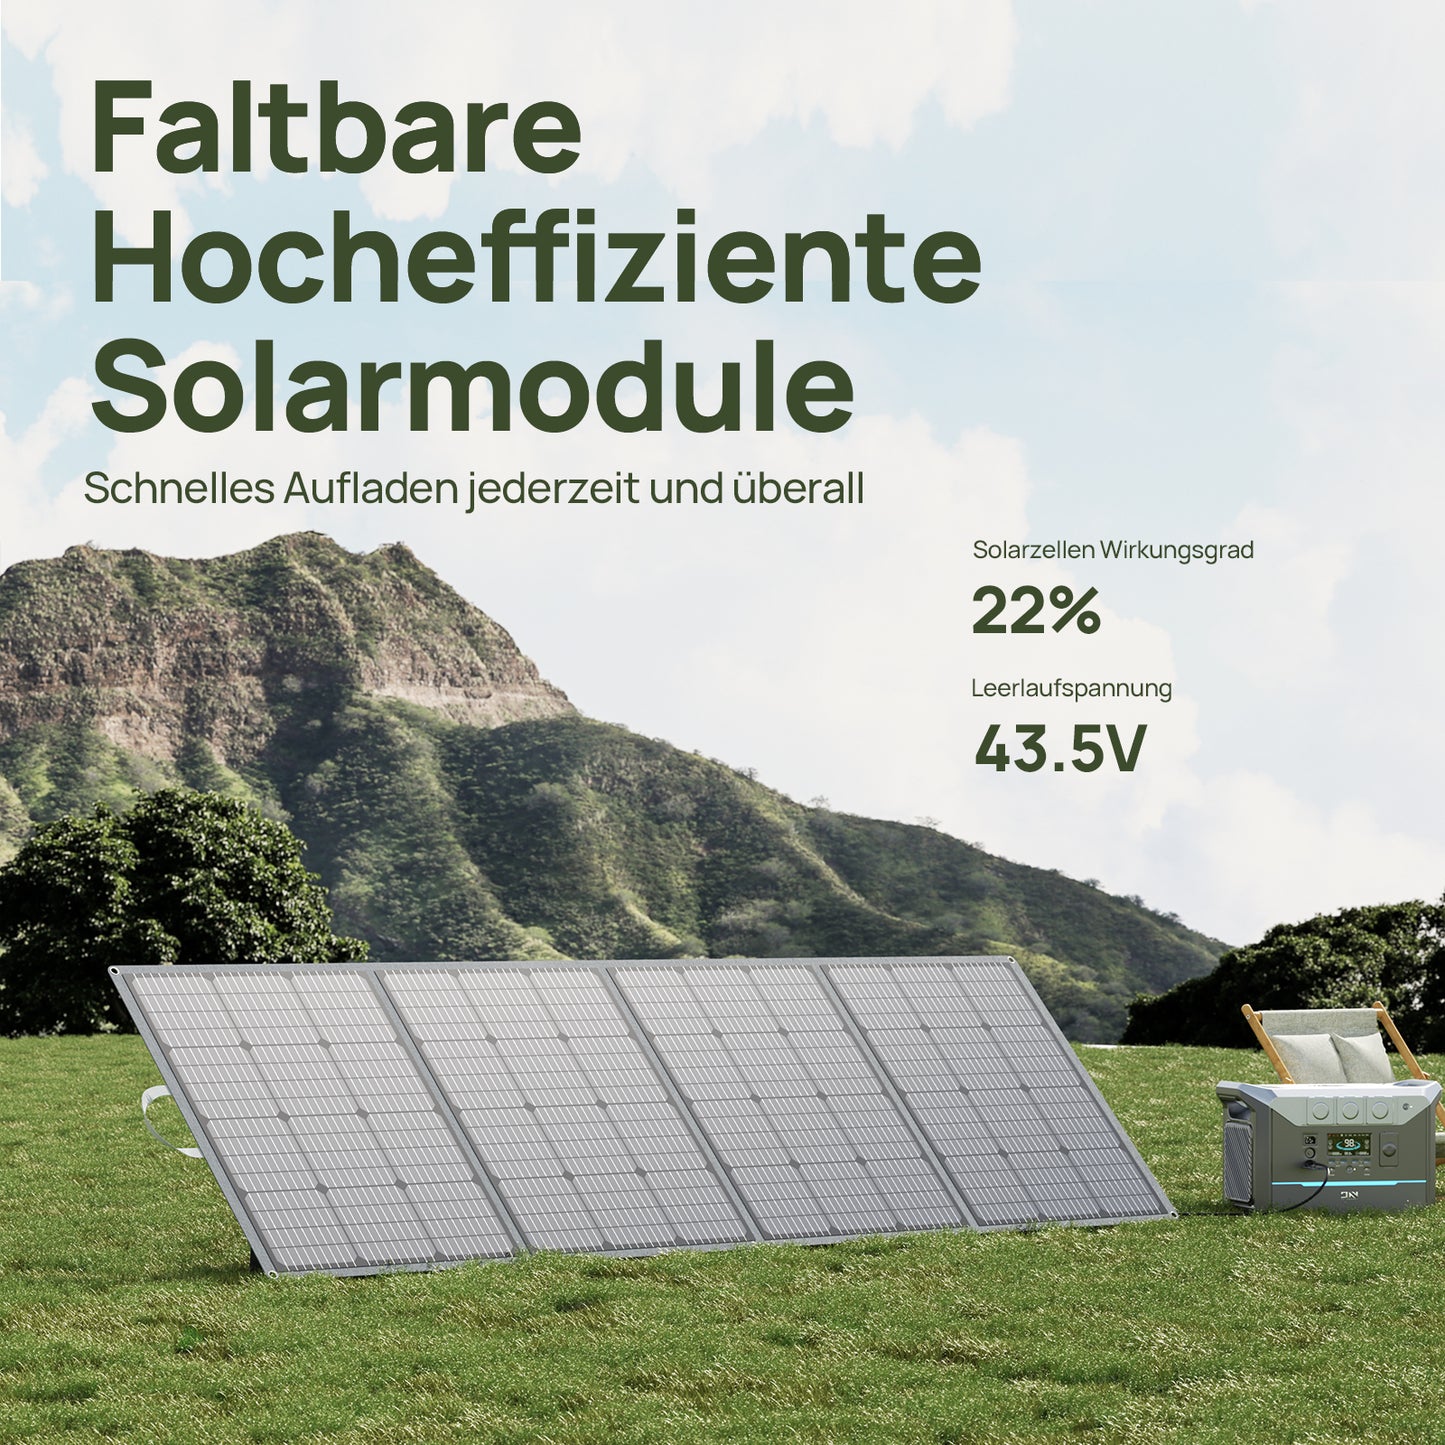 DaranEner SP300 Solar Panel | 300W